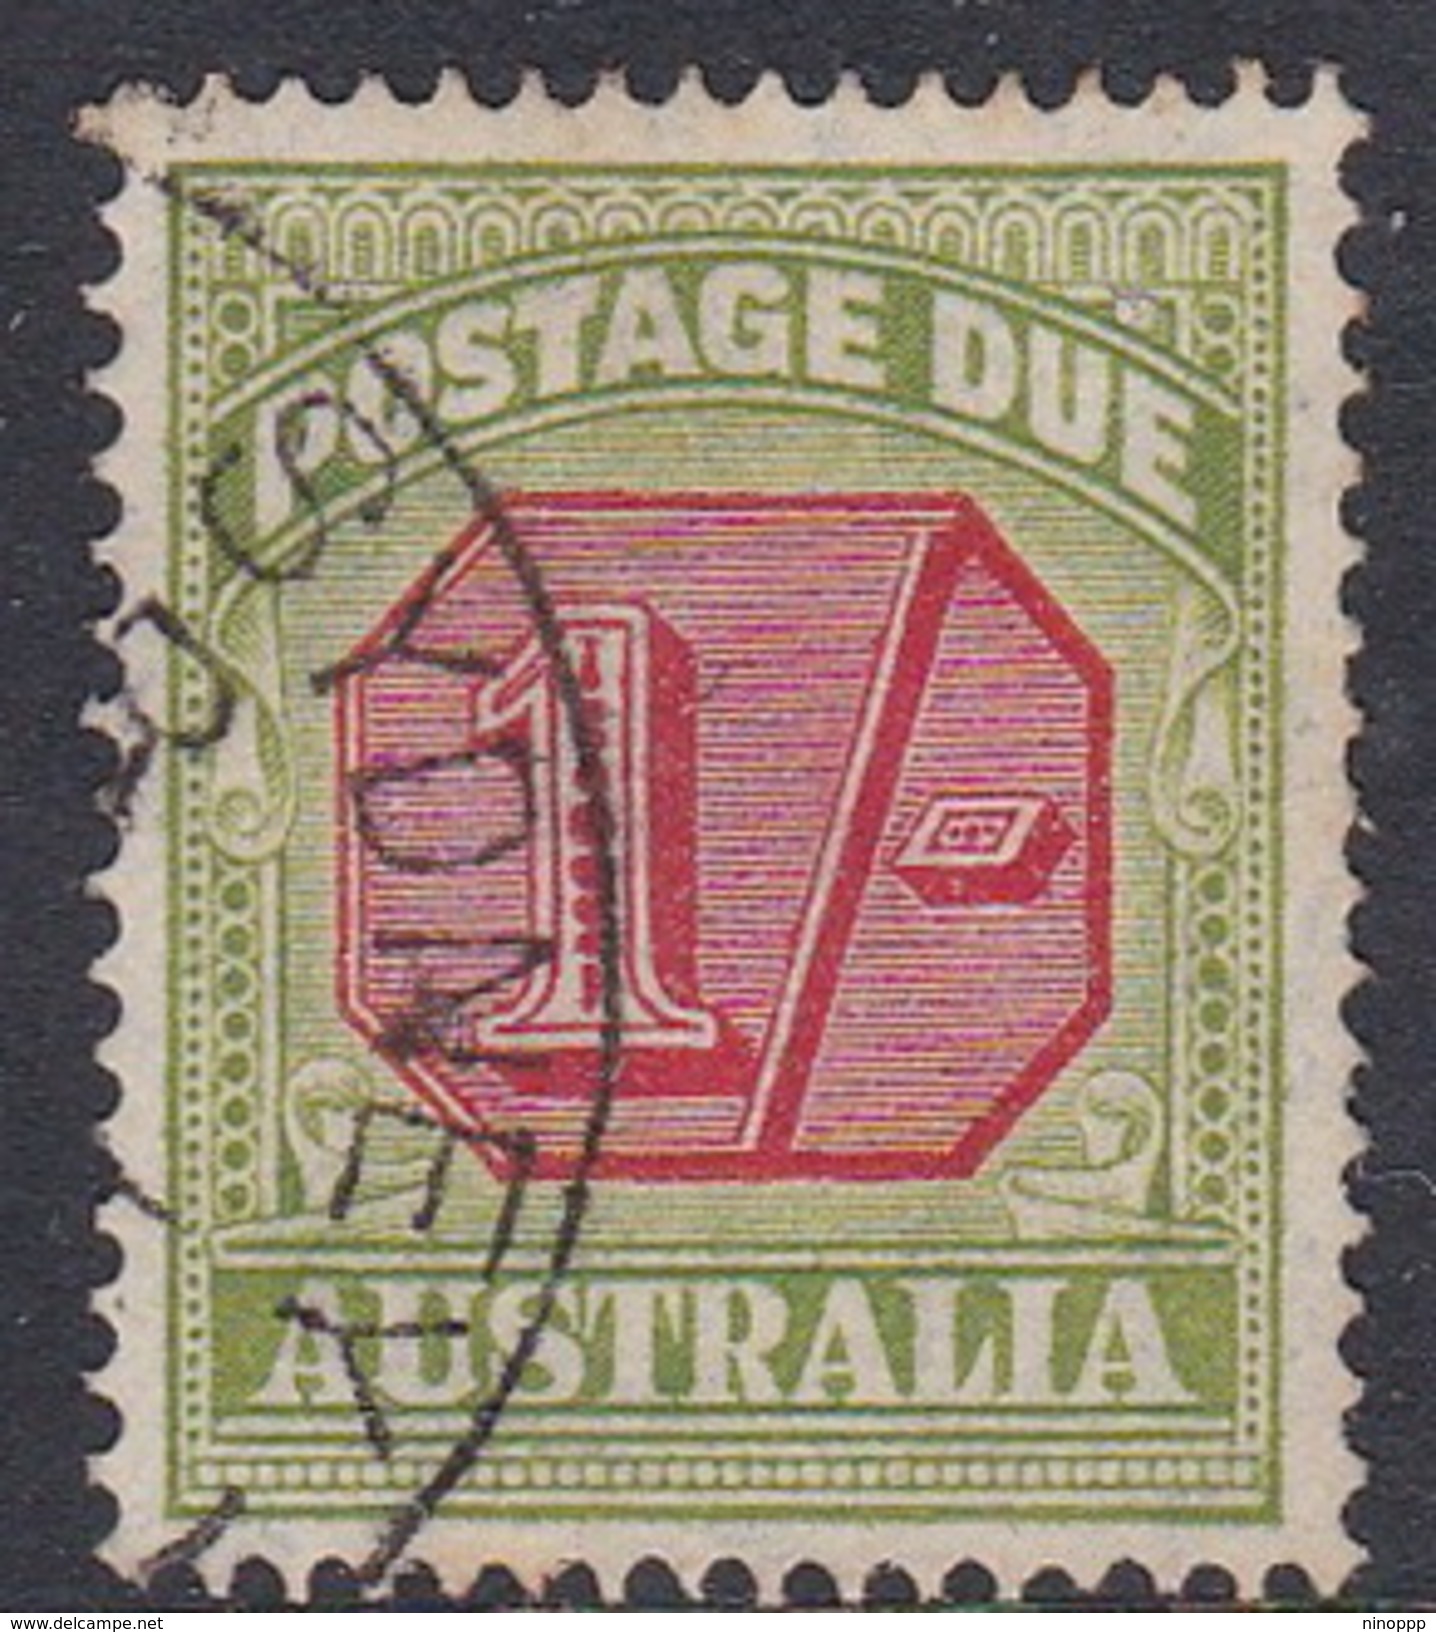 Australia Postage Due Stamps SG D118 1938 One Shilling Used - Segnatasse